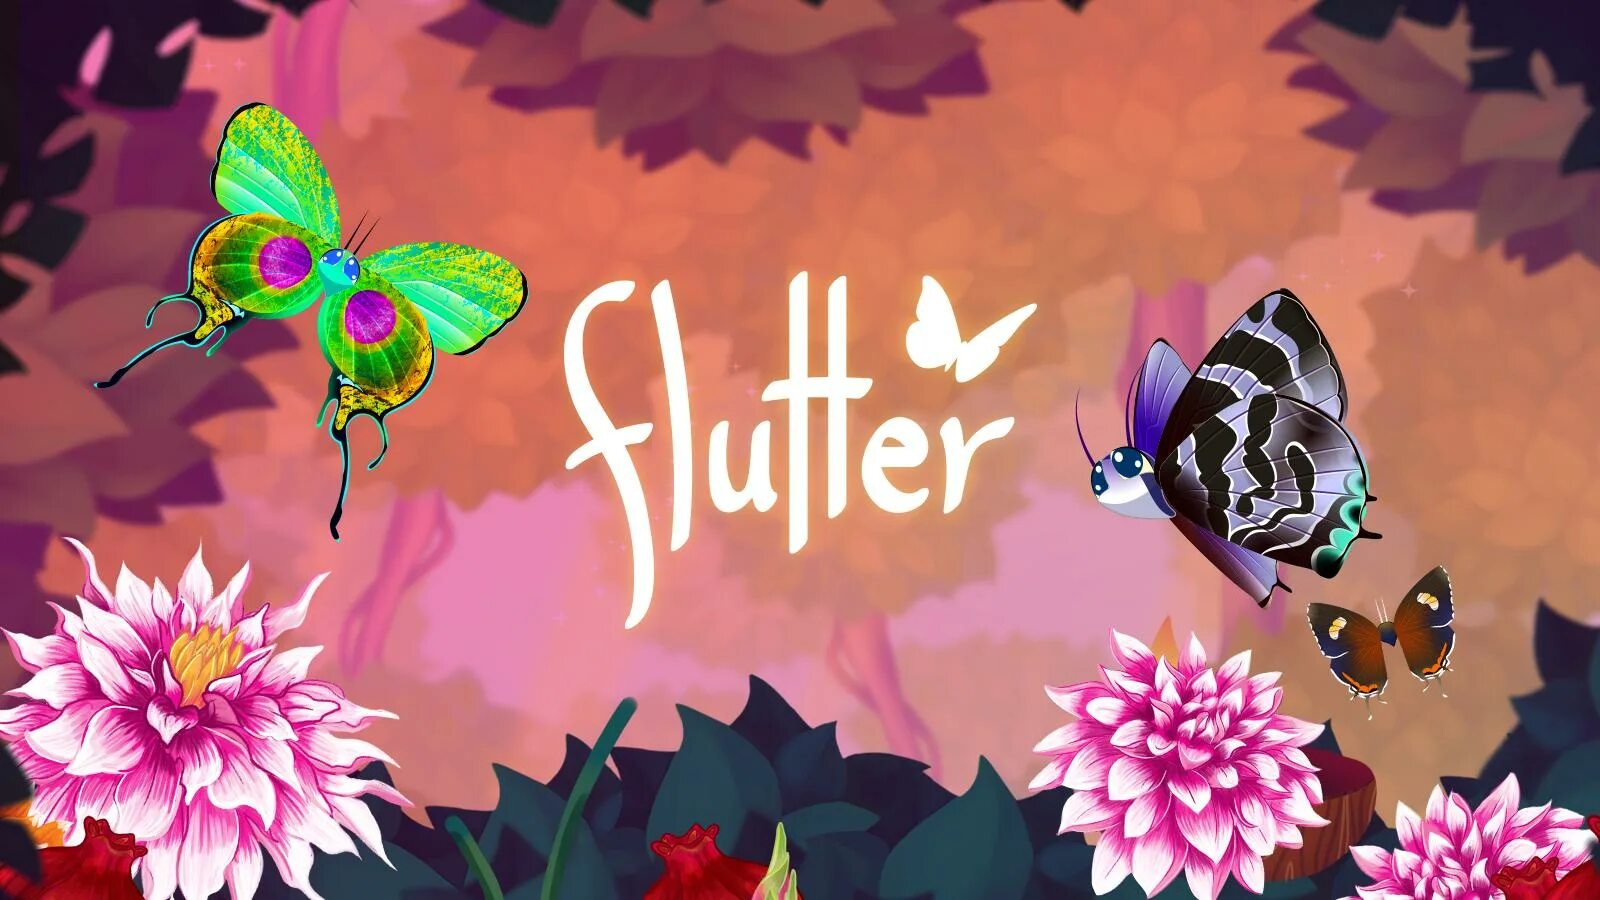 Flutter Butterfly Sanctuary. Flutter игра. Flutter Butterfly Sanctuary бабочки. Flutter Butterfly Sanctuary Вики. Игра бабочки 3